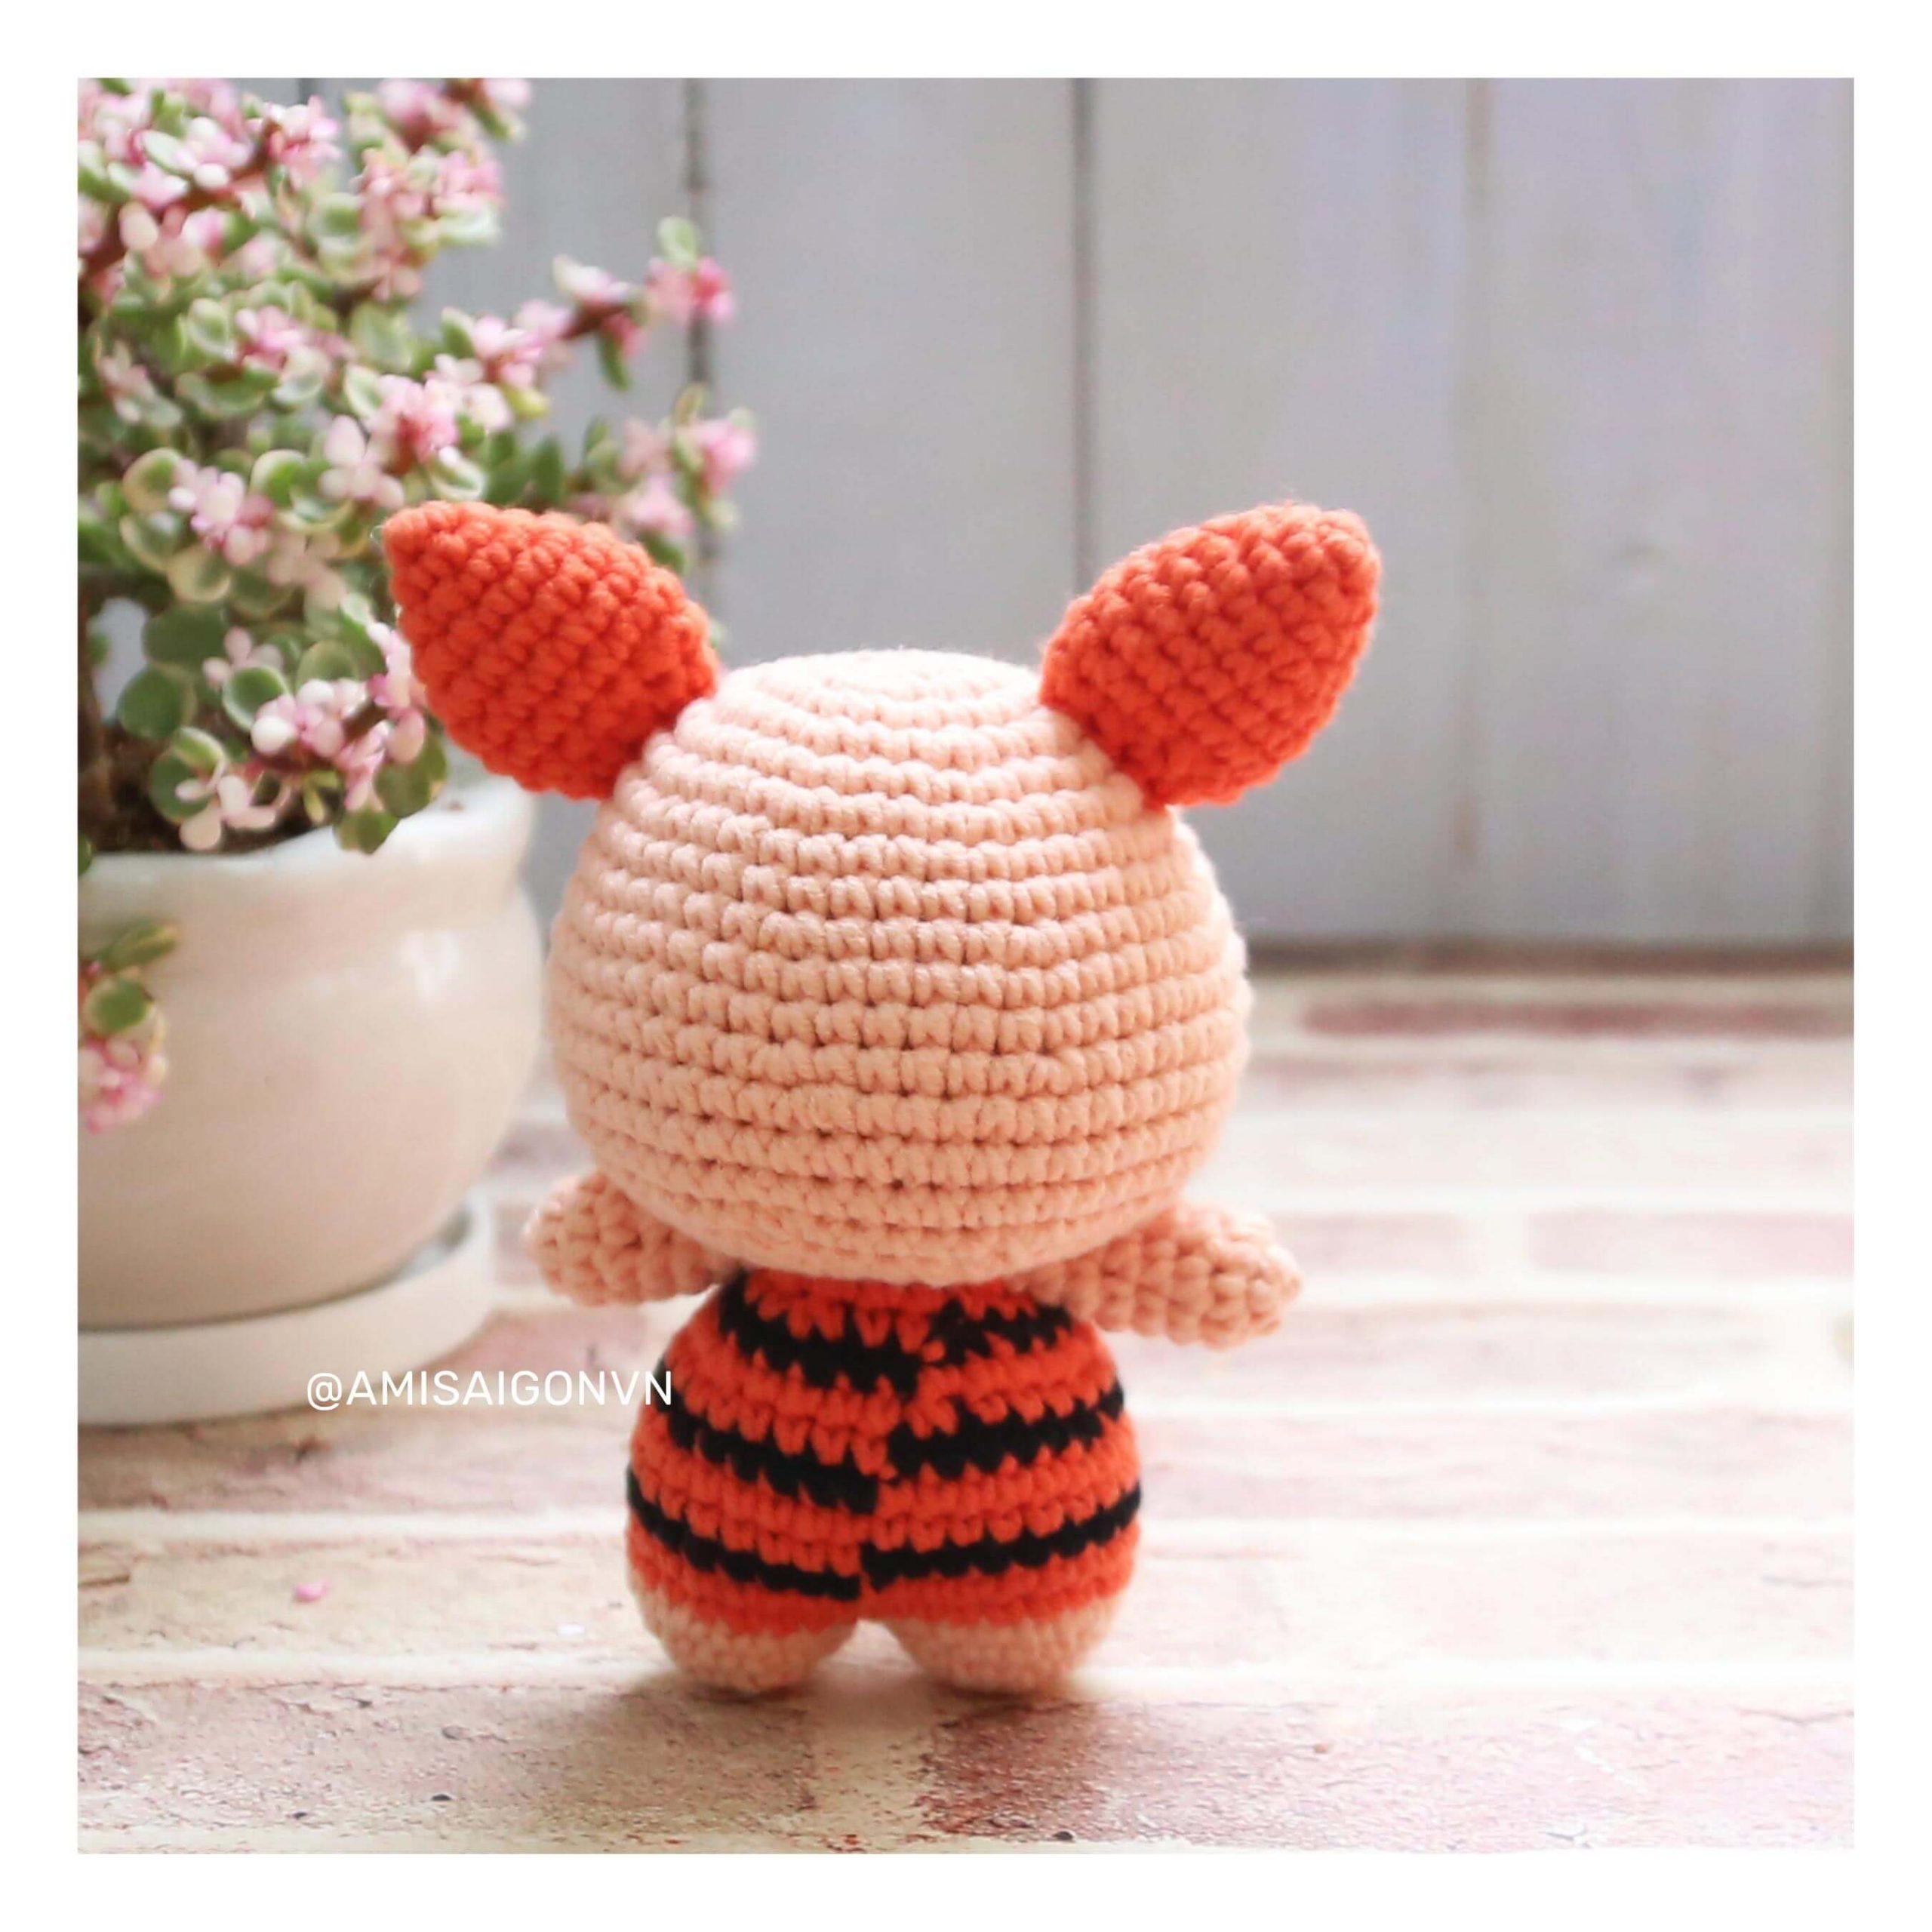 piglet-amigurumi-crochet-pattern-amisaigon (2)